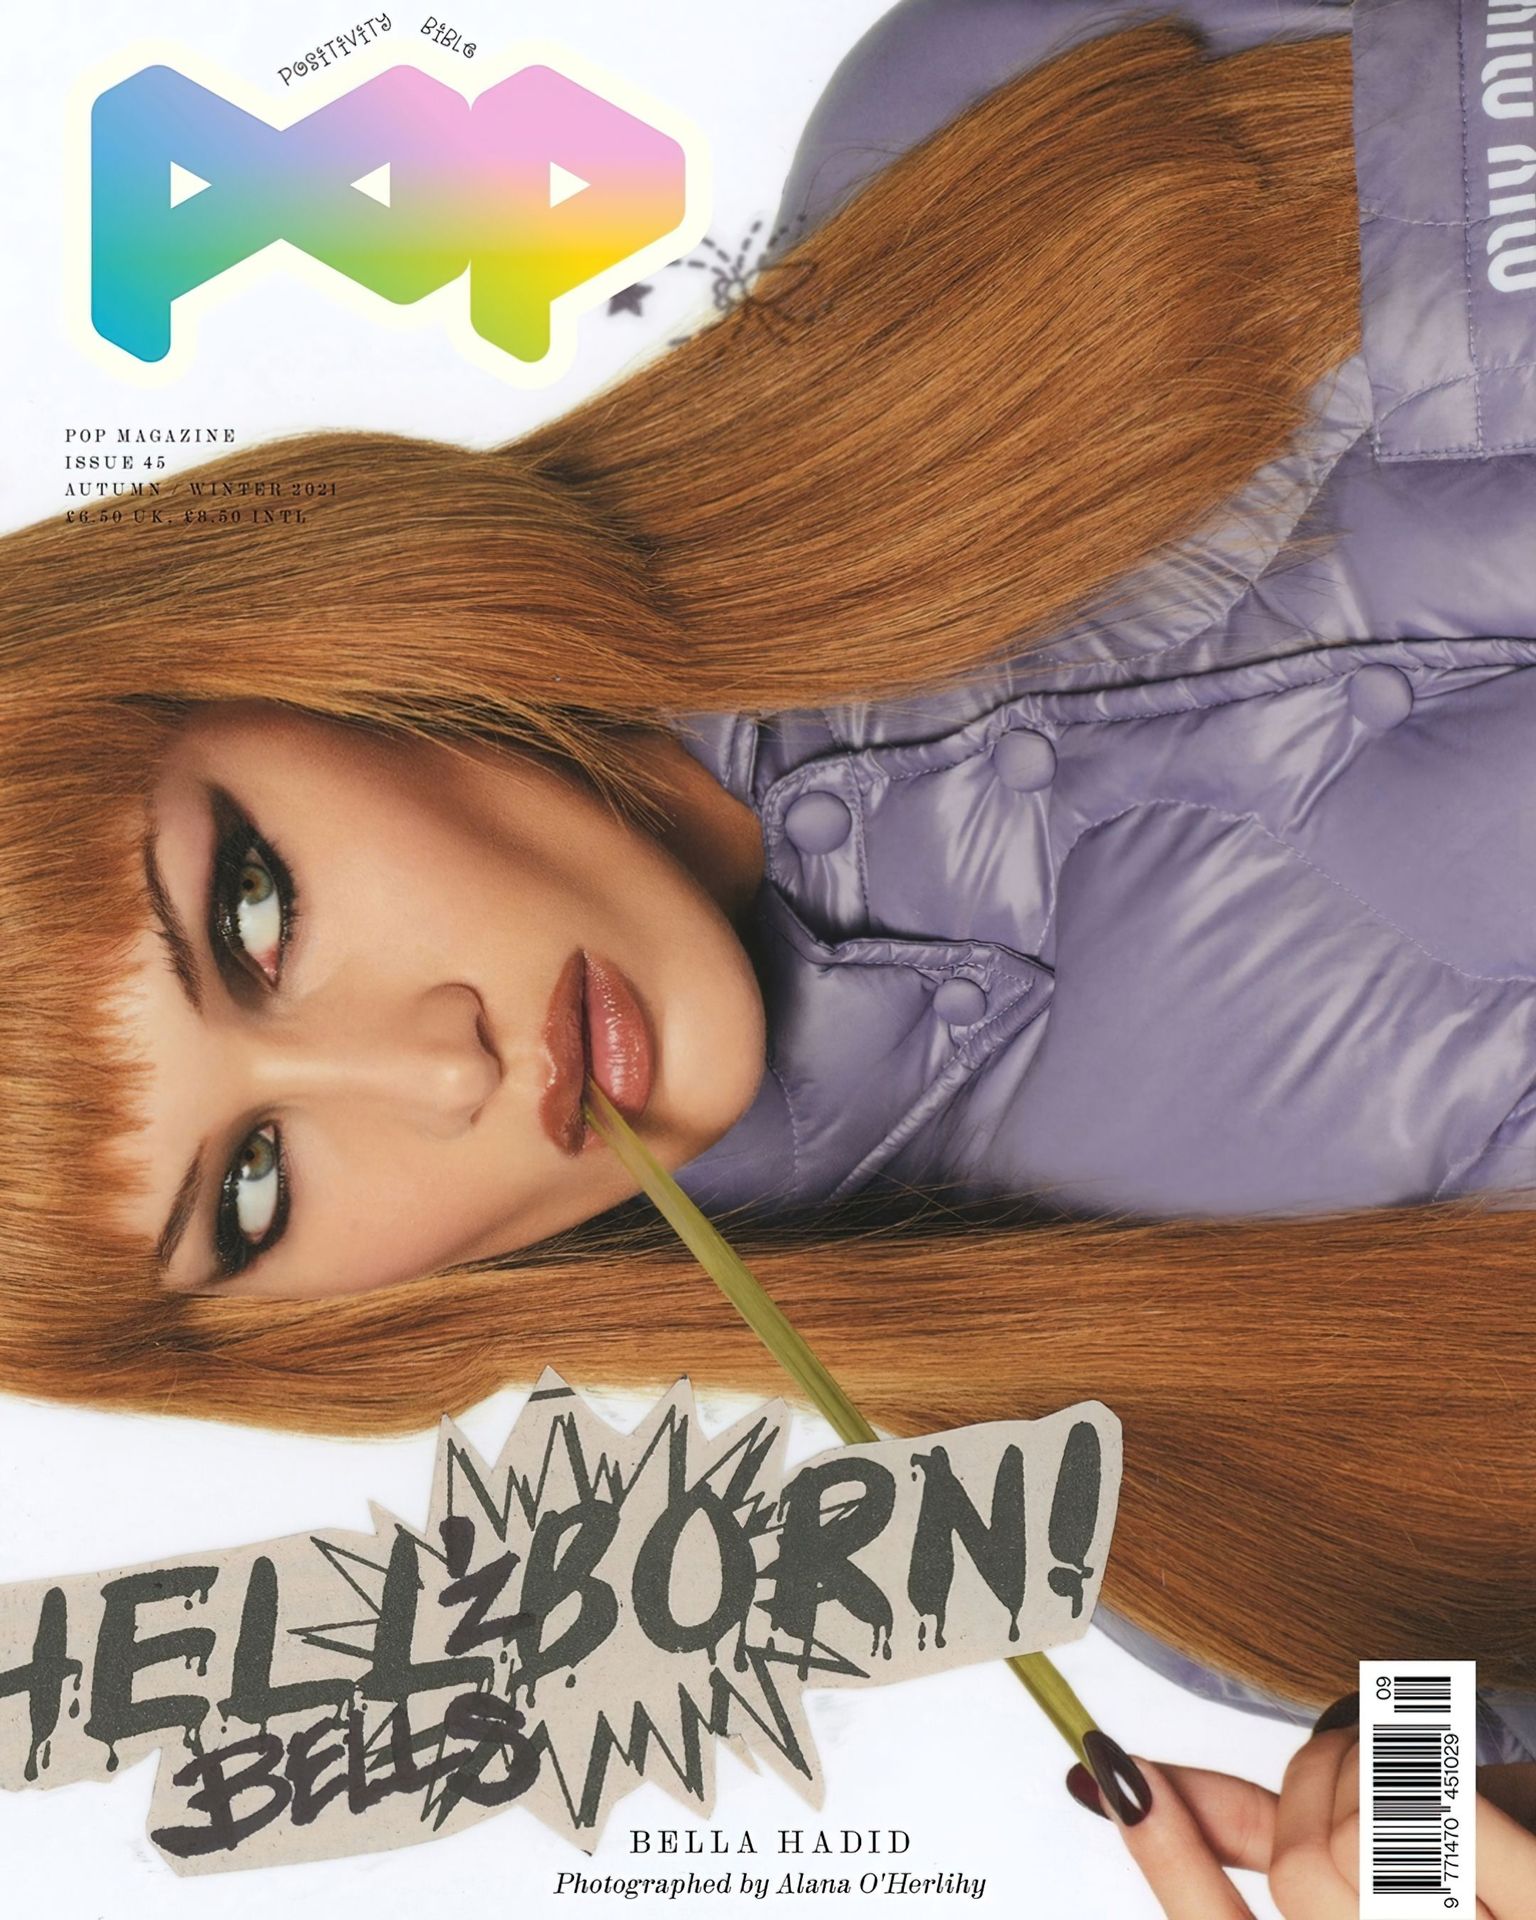 Bella-Hadid-Sexy-POP-Magazine-1-thefappeningblog.com_.jpg